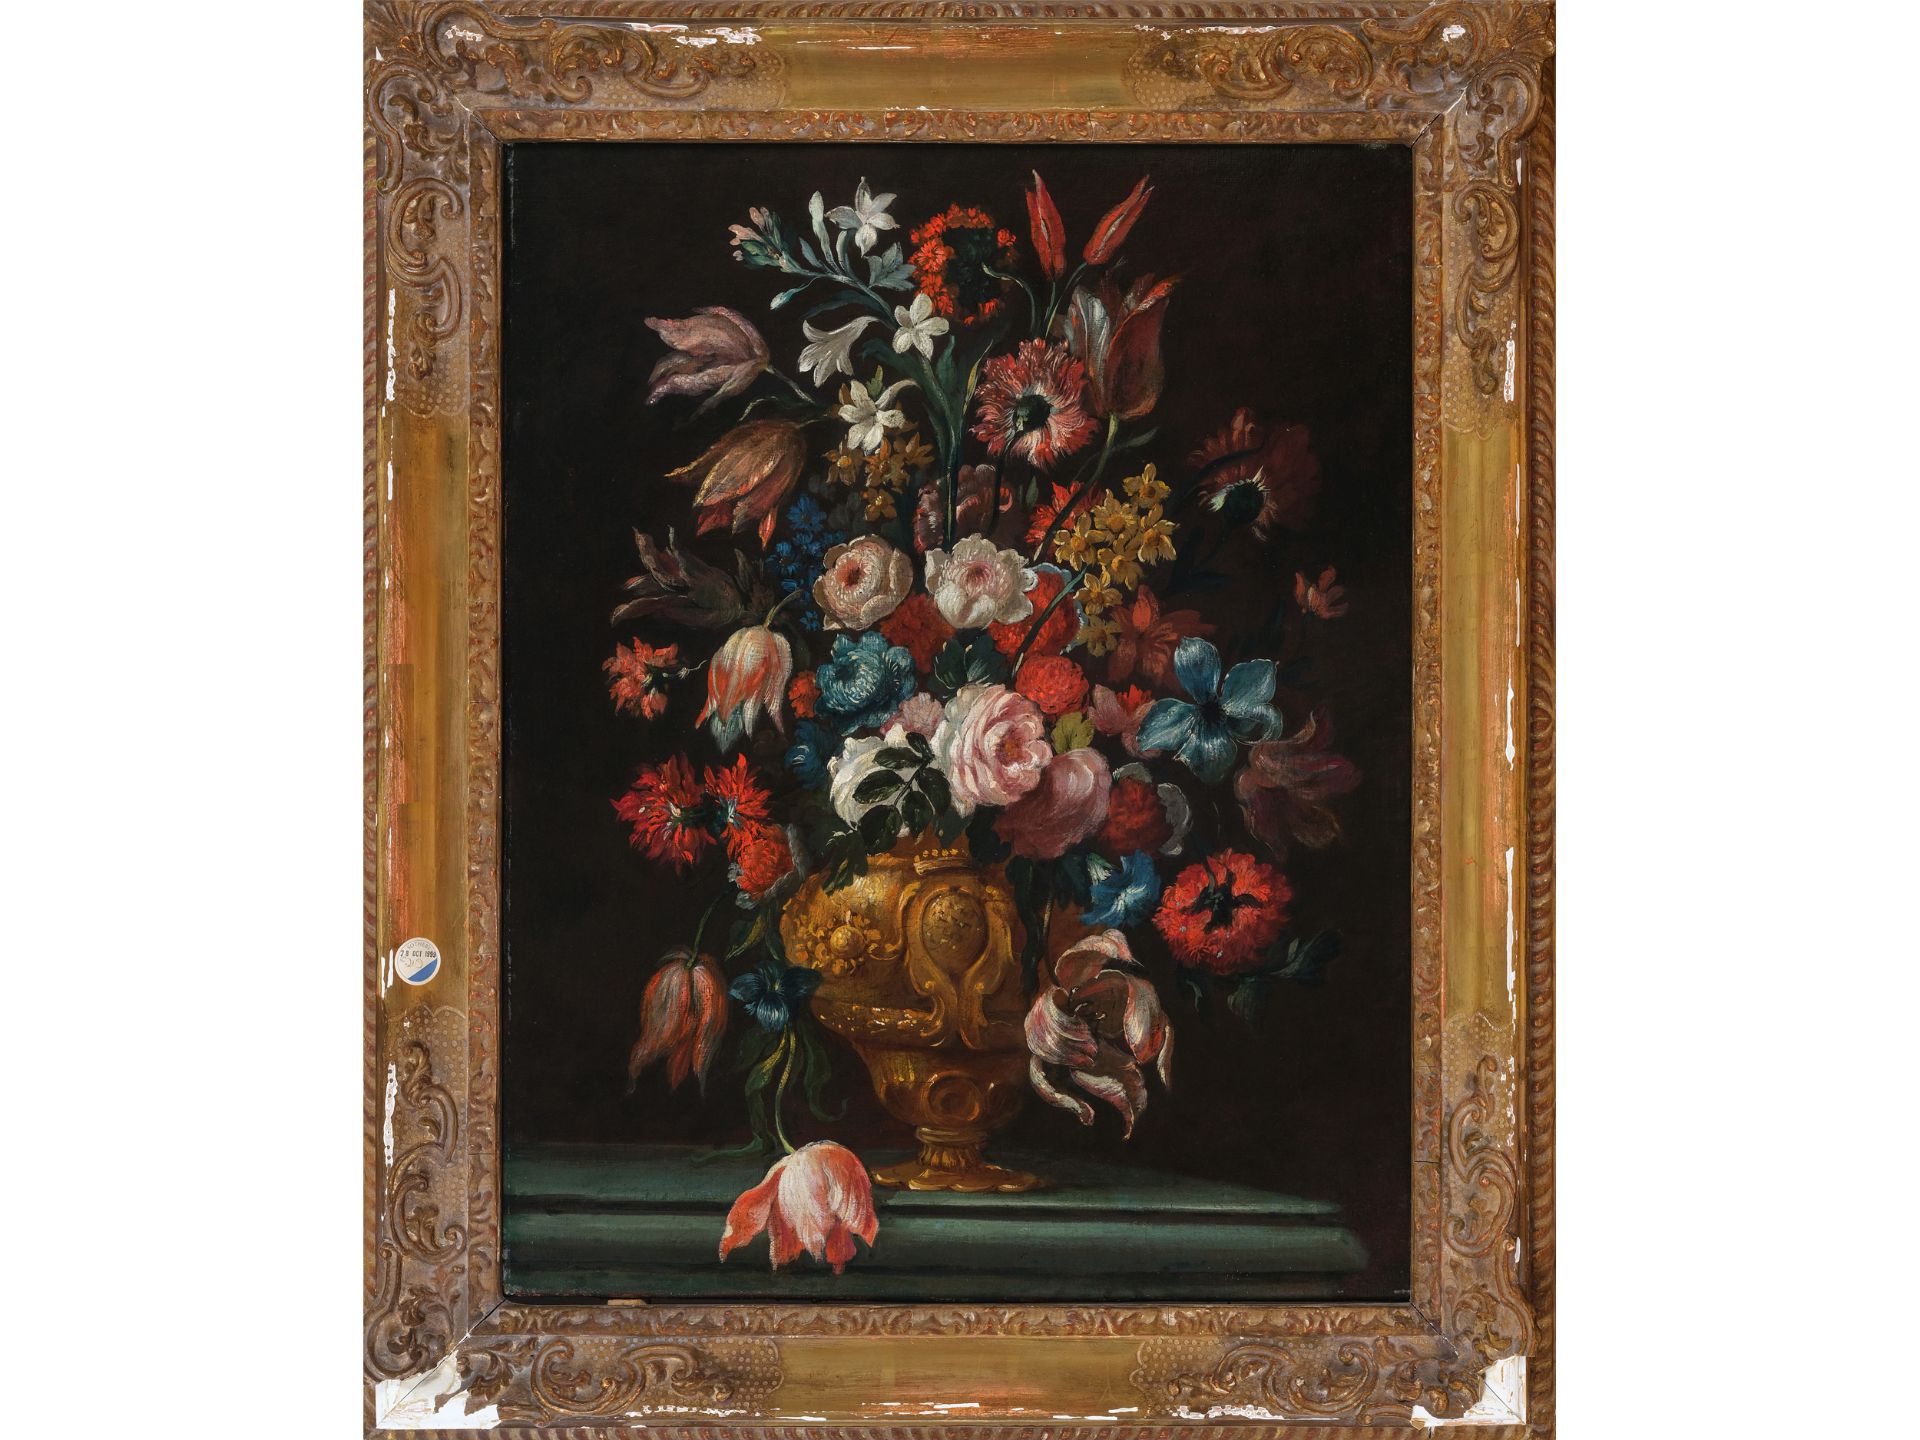 Jan Philip van Thielen, Mechelen 1618 - 1667 Booischot, attributed, Large flower piece - Image 2 of 3